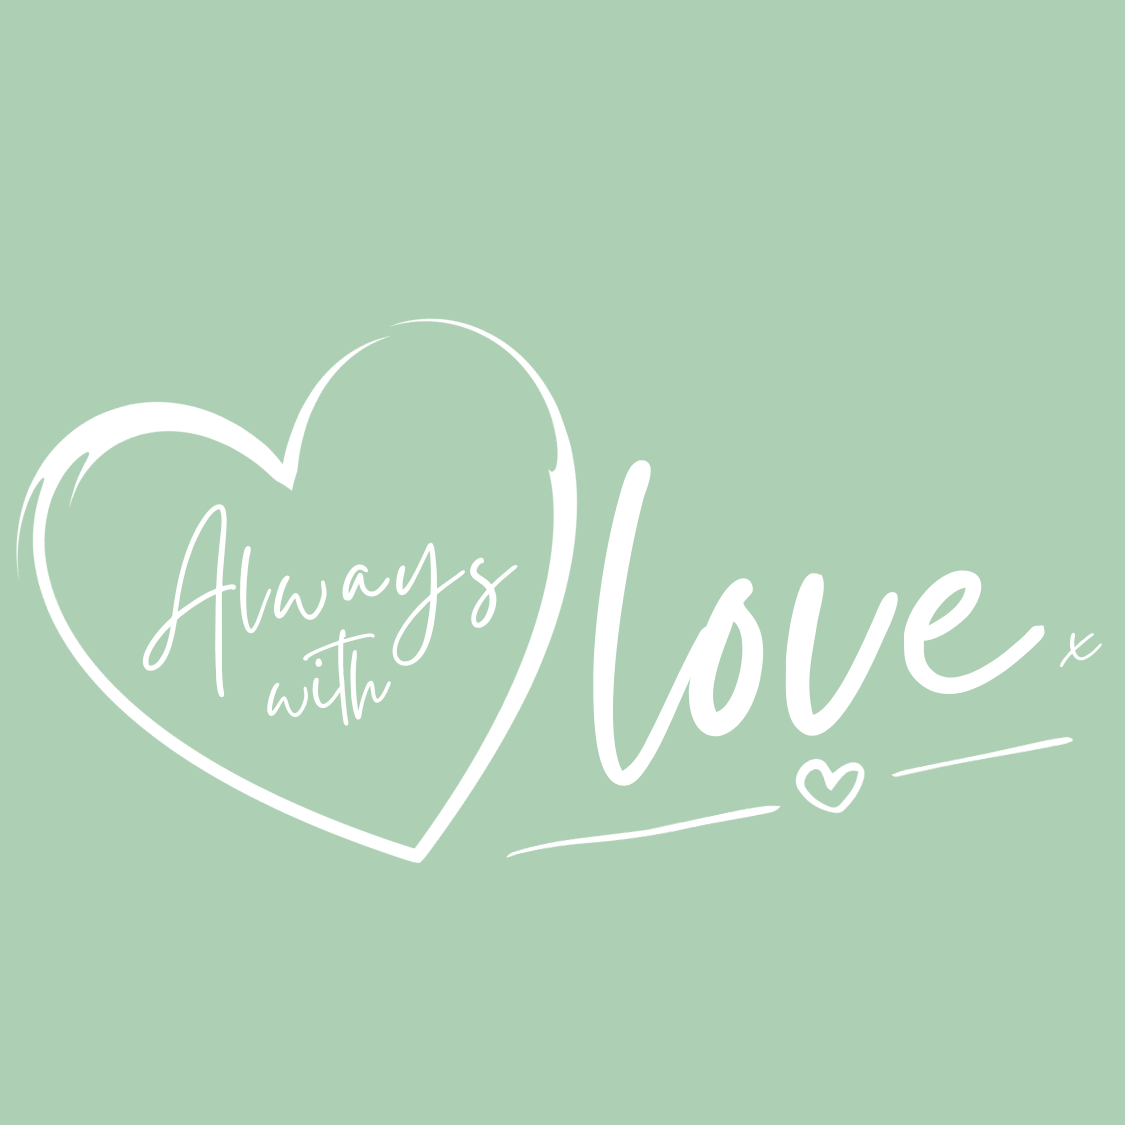 Always With Love's logo